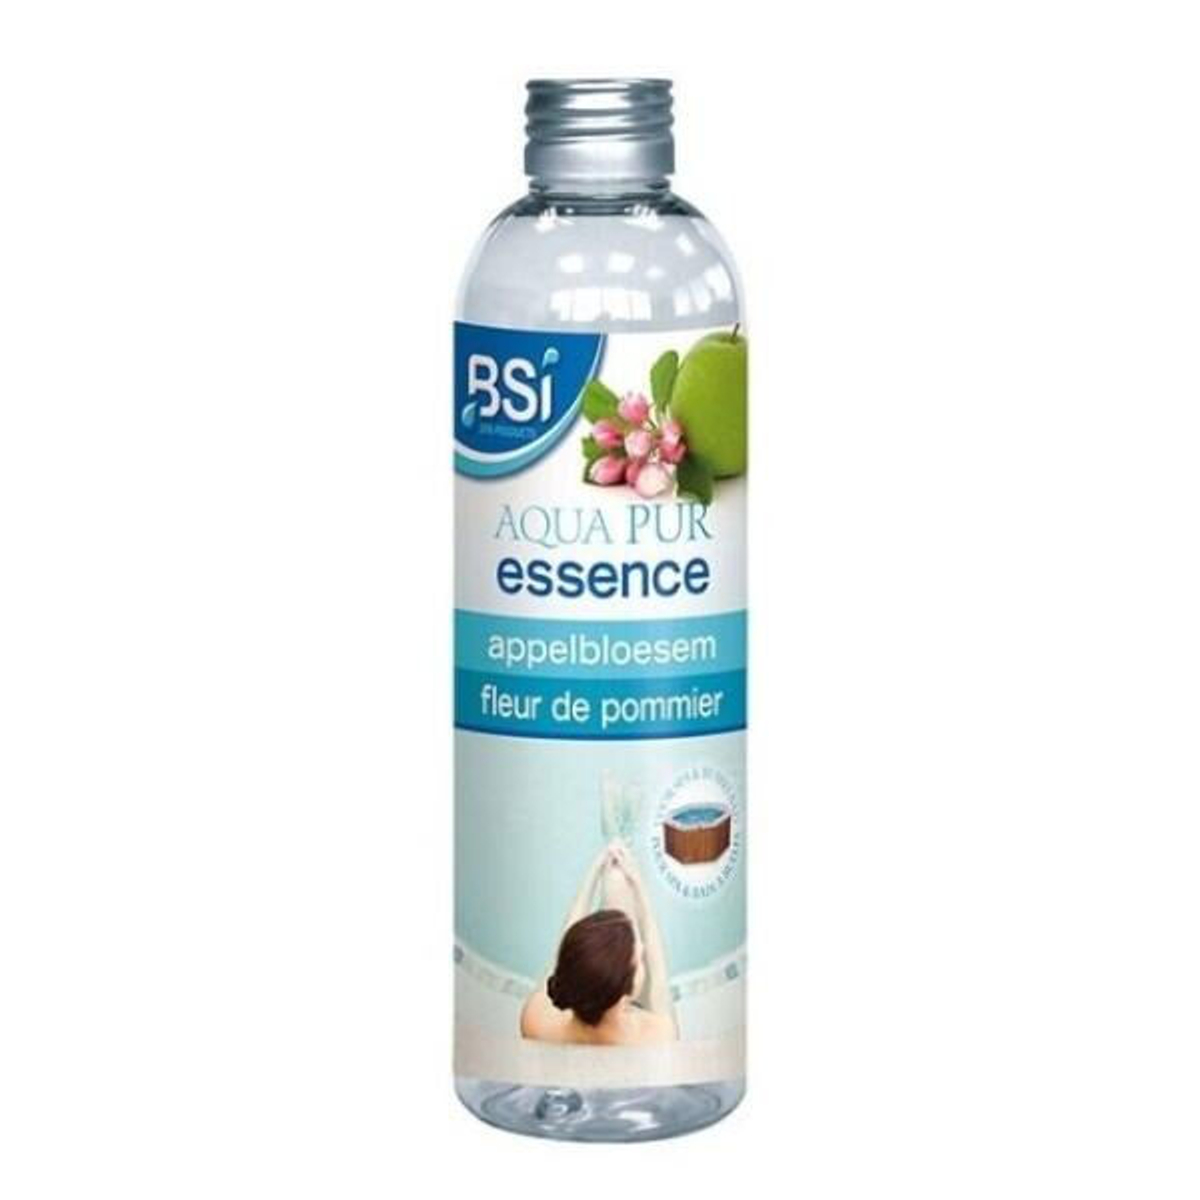 BSI Aqua Pur Essence Appelbloesem 250 ml